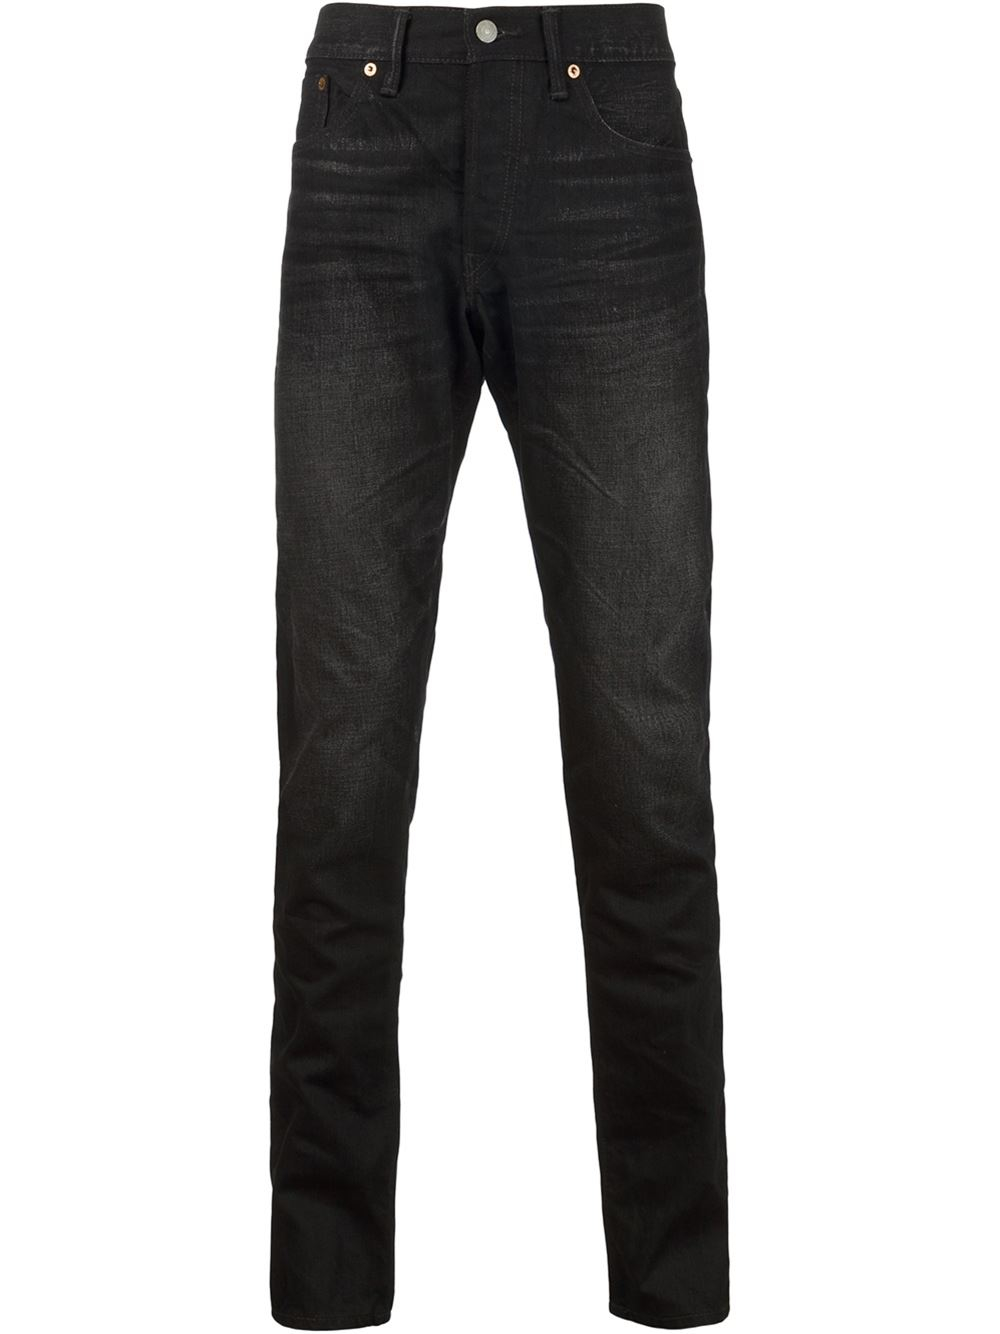 Lyst - Rrl 'slim Narrow Watts' Jeans in Black for Men